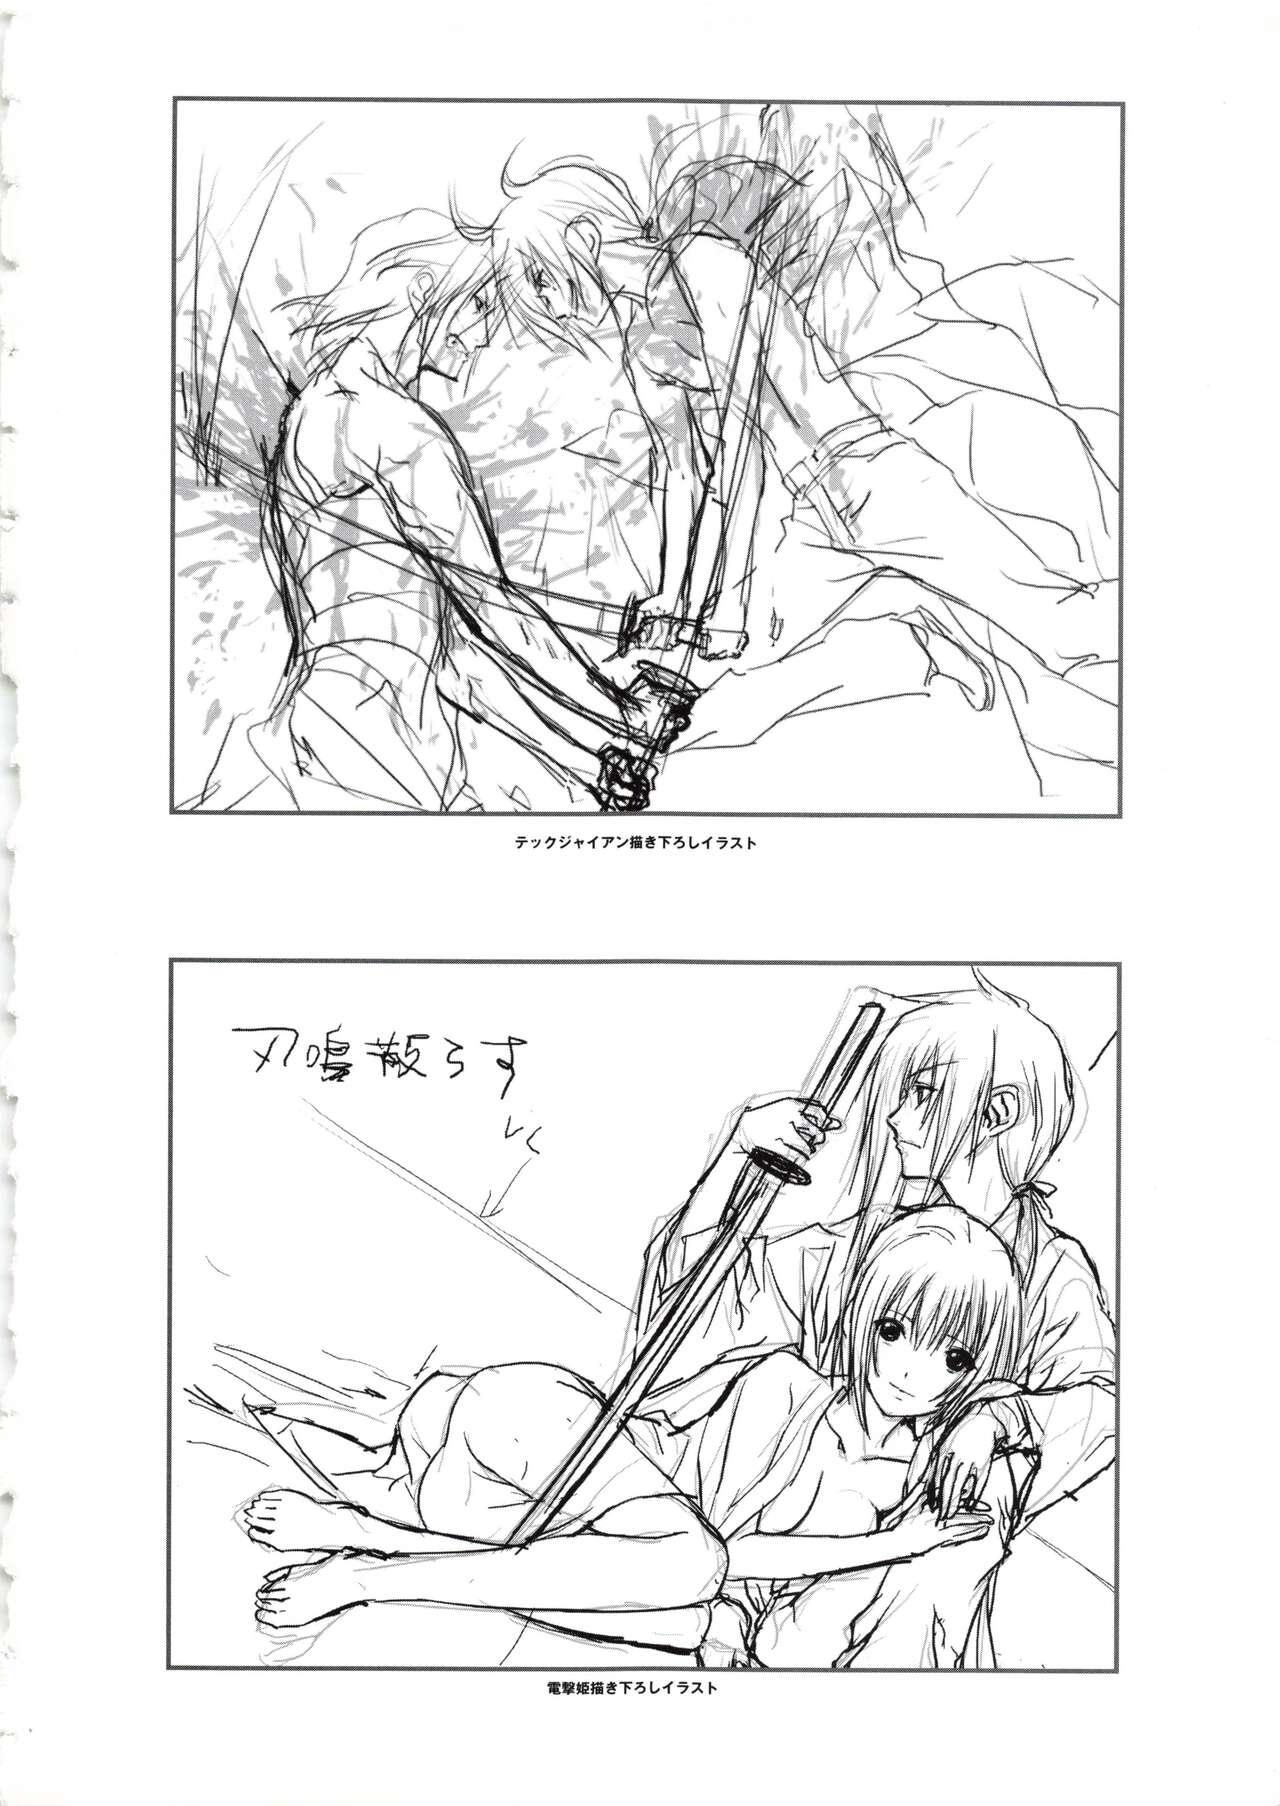 Hanachirasu - Initial Sketches and Unprocessed Illustrations - Selection 42